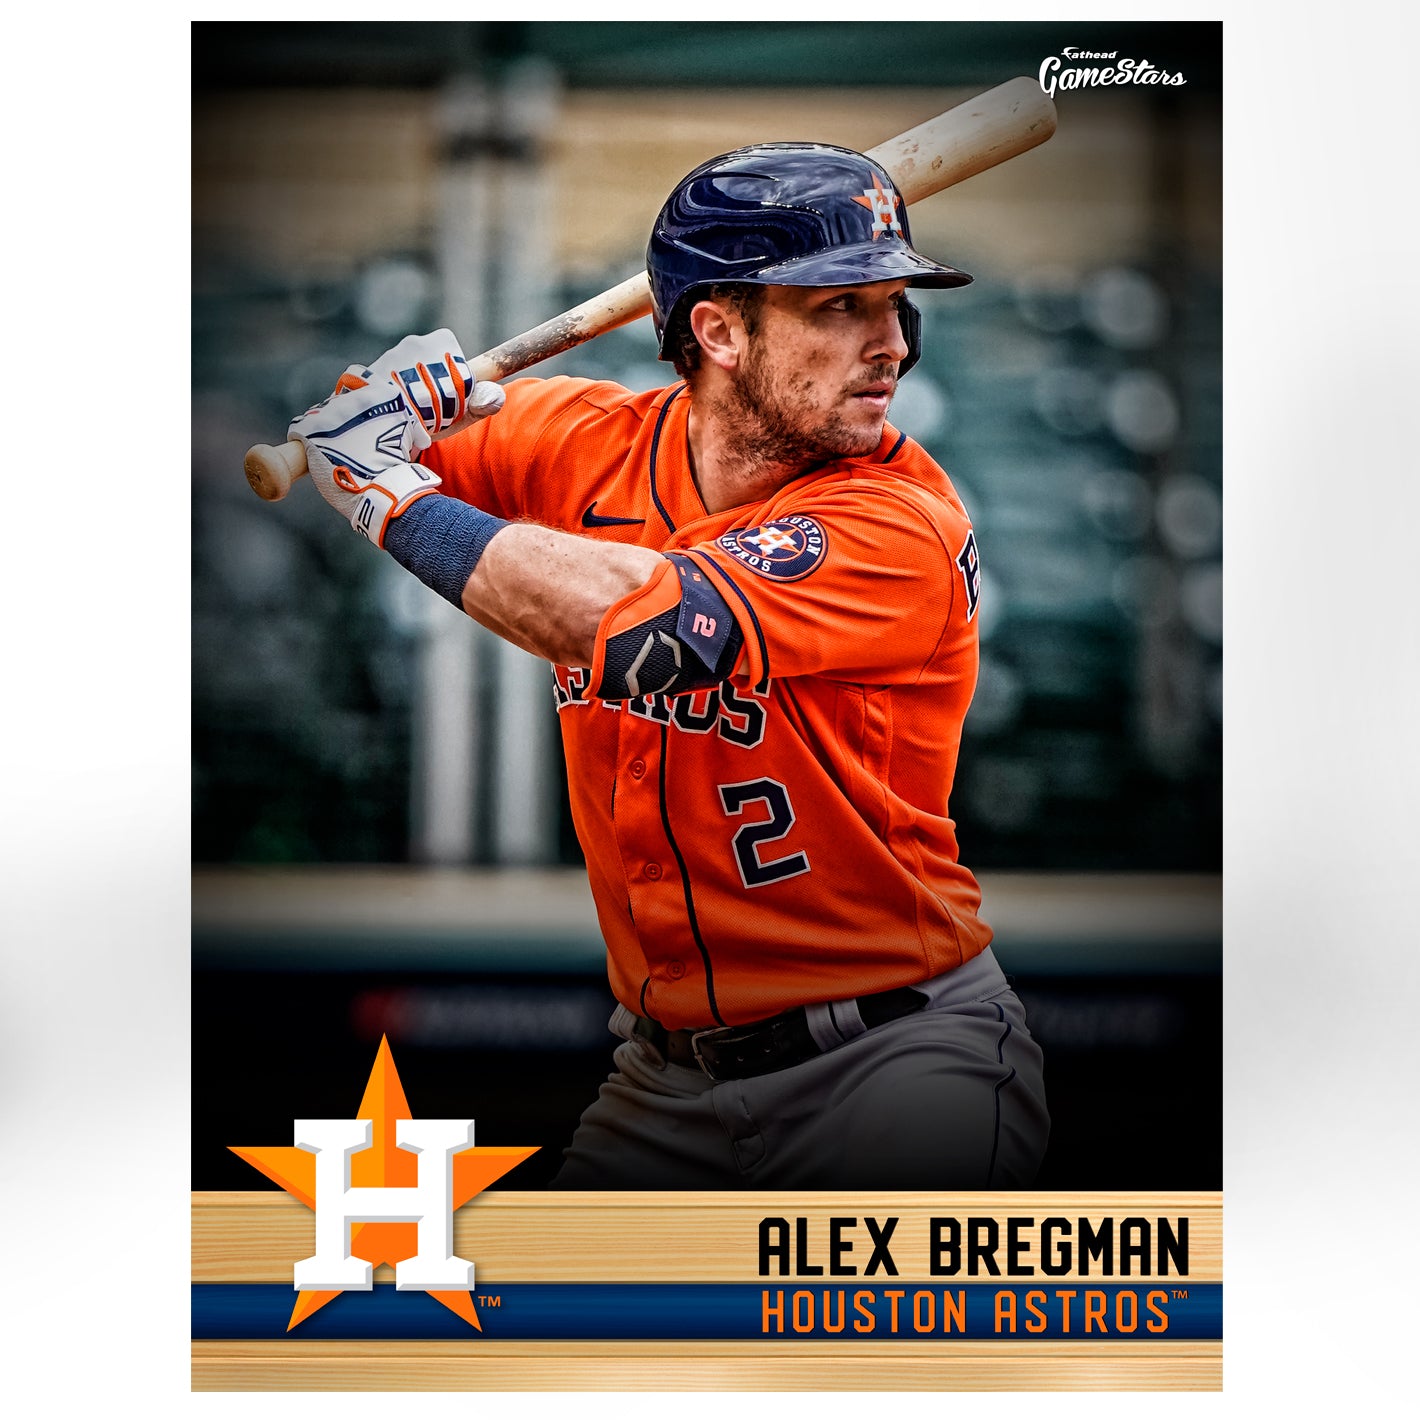 Player Alexbregman Alex Bregman Alex Bregman Houston Astros Houstonastros  Alexanderdavidbregman Alex Poster